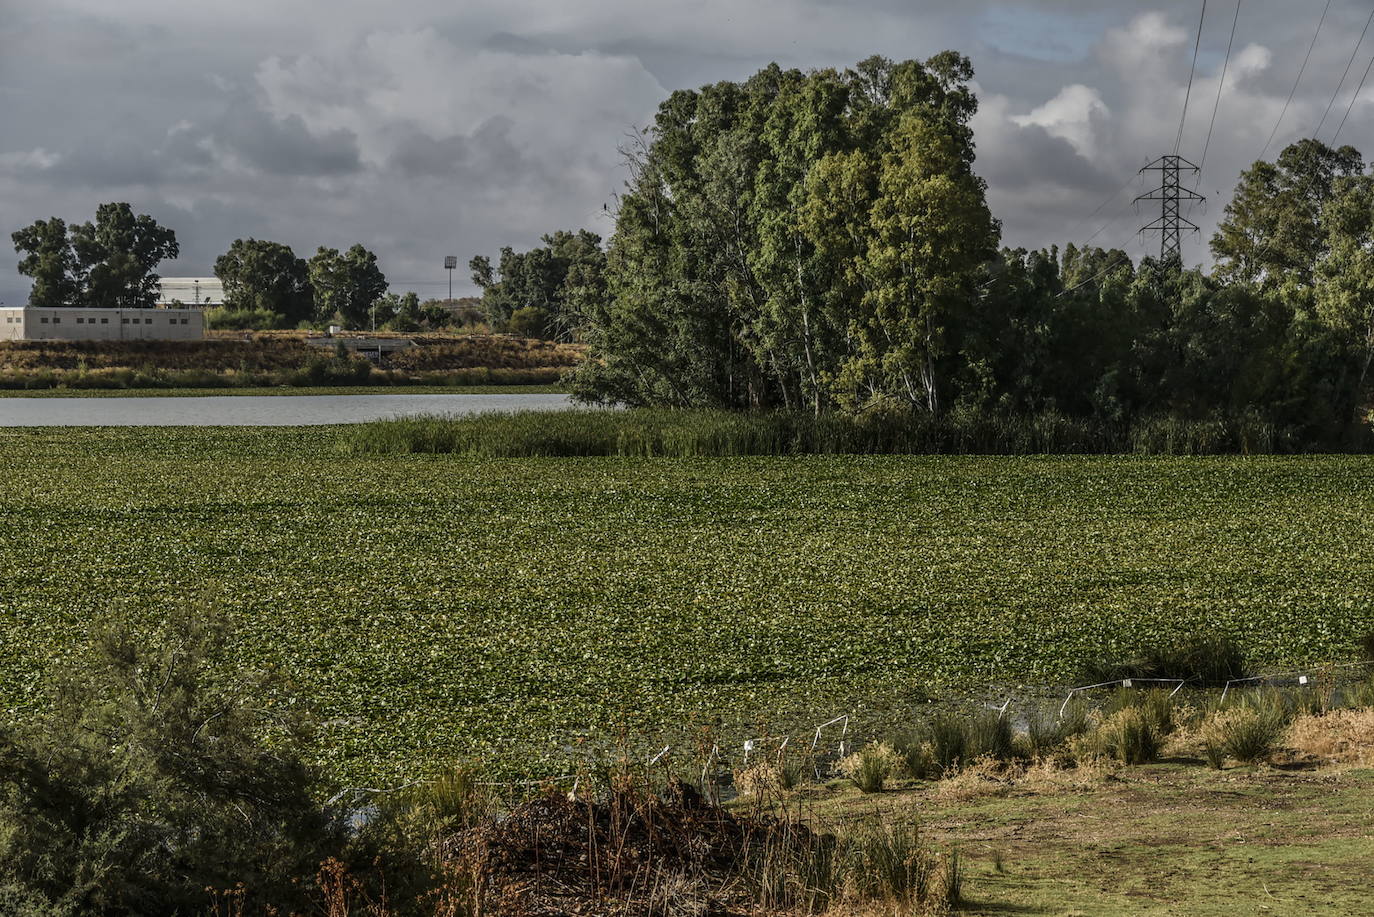 La CHG prevé iniciar las obras del azud de Badajoz a finales de mes o inicios de octubre